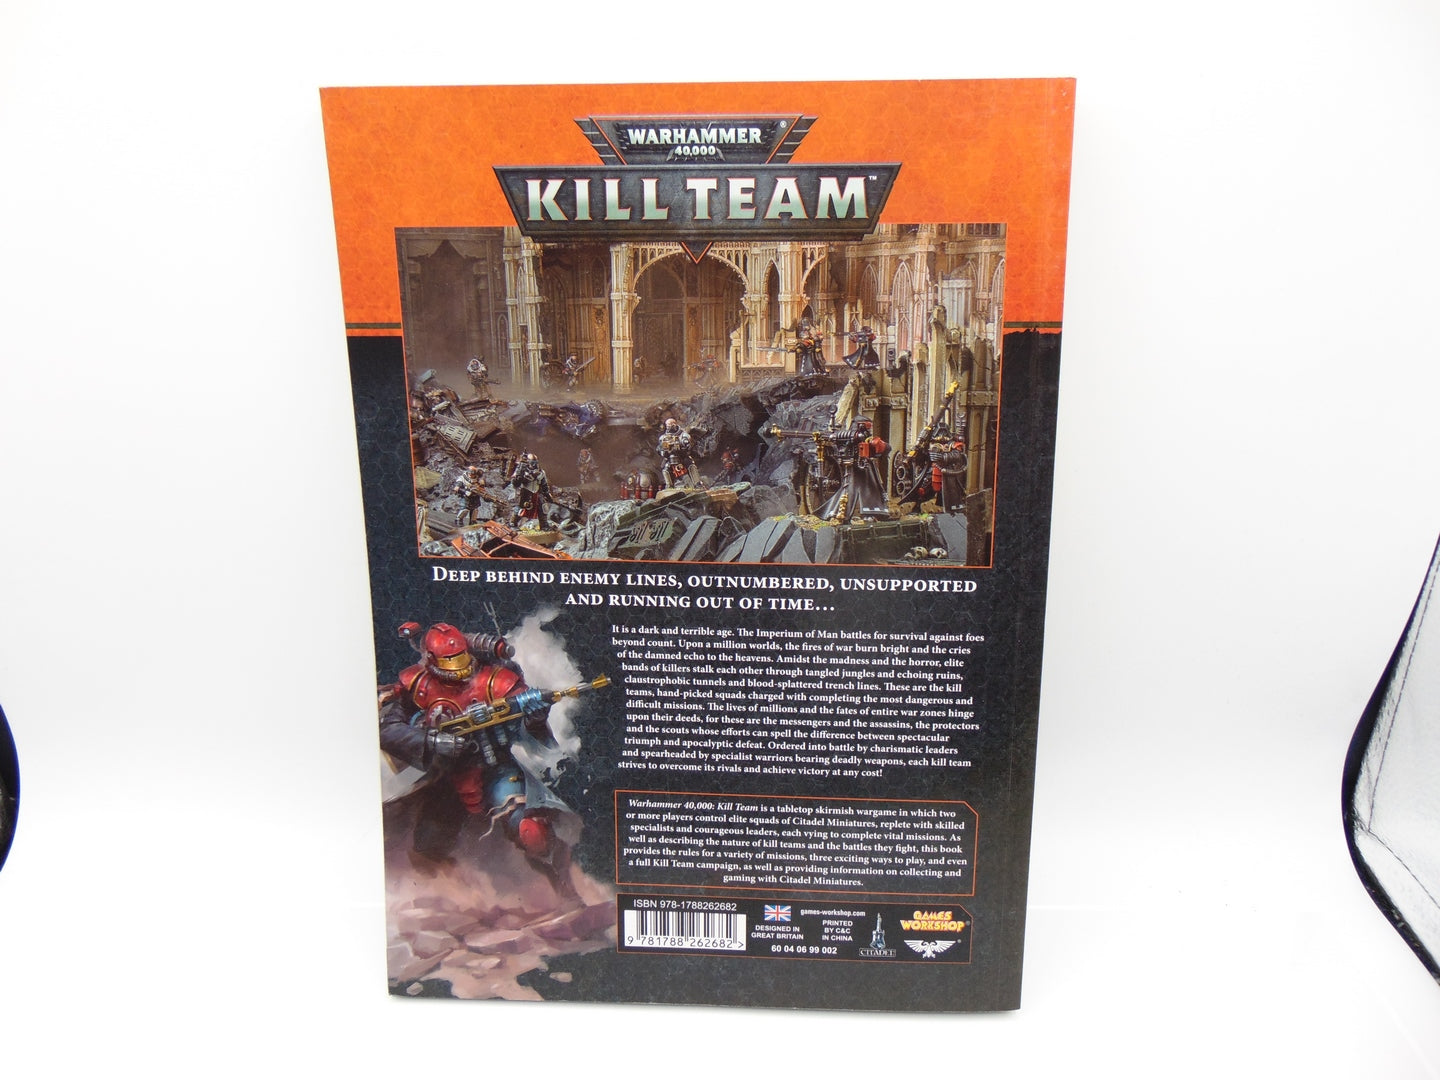 Games Workshop Warhammer 40,000 Kill Team Core Manual